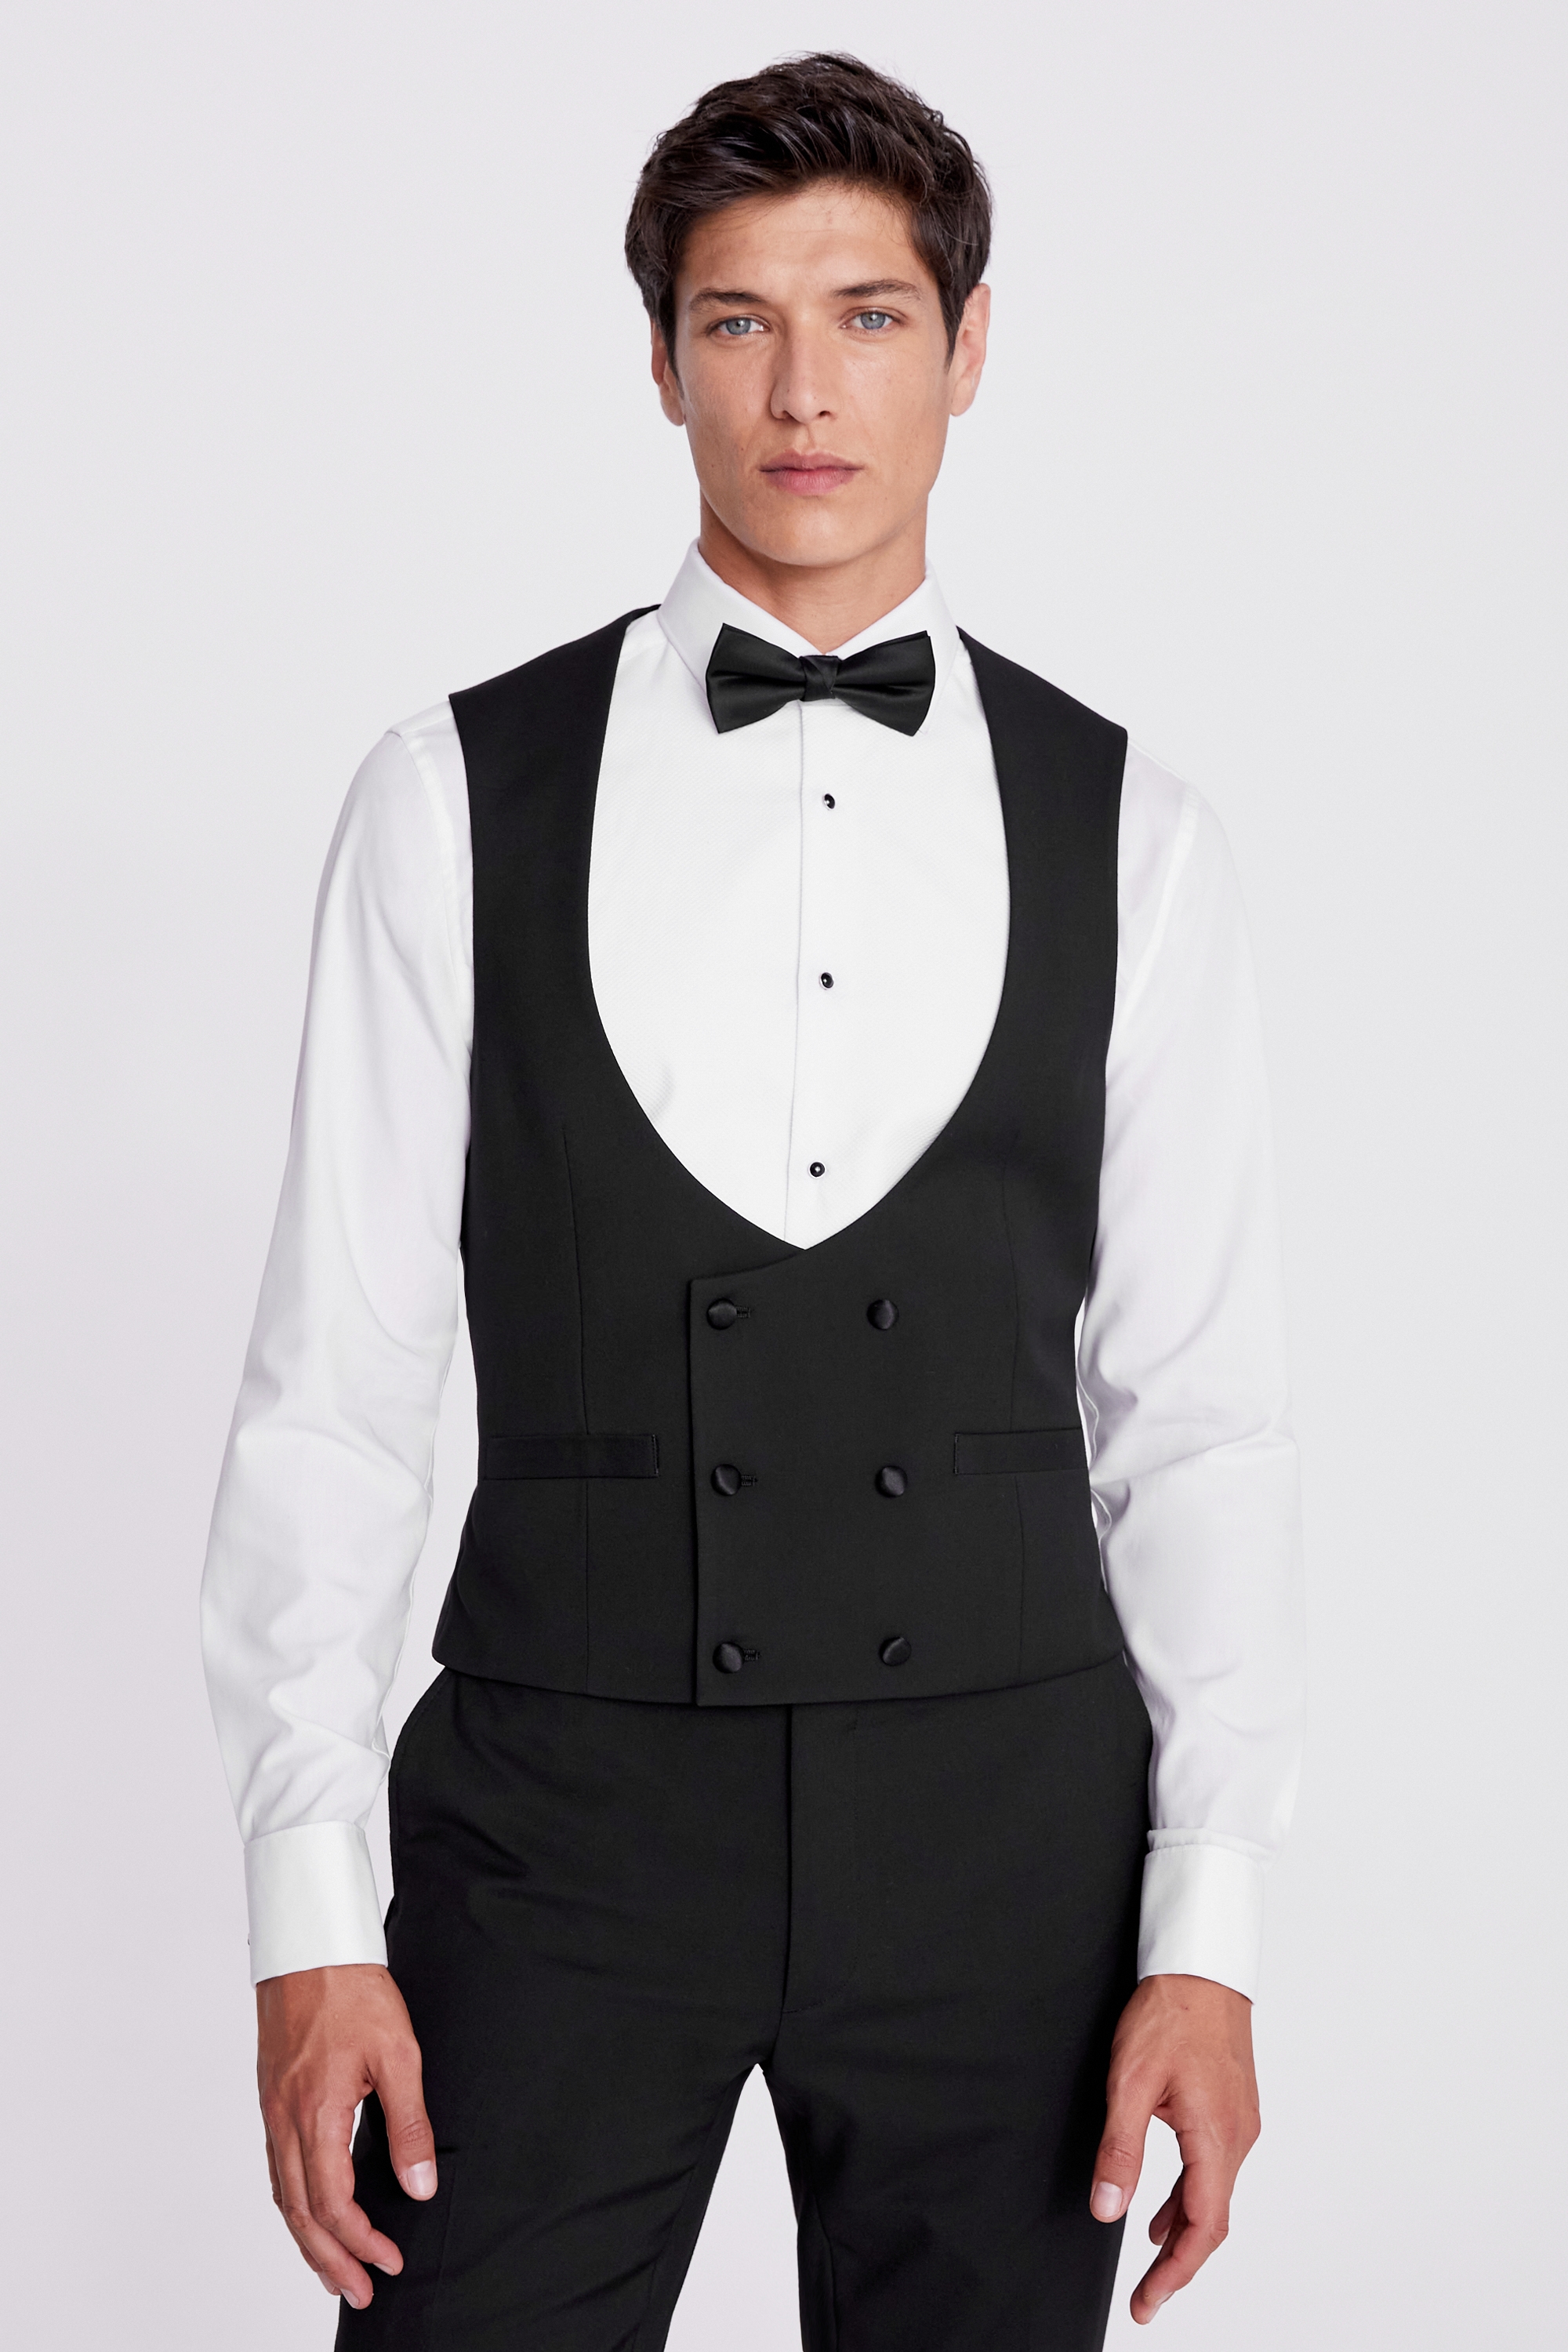 Slim Fit Black Dress Waistcoat | Buy Online at Moss